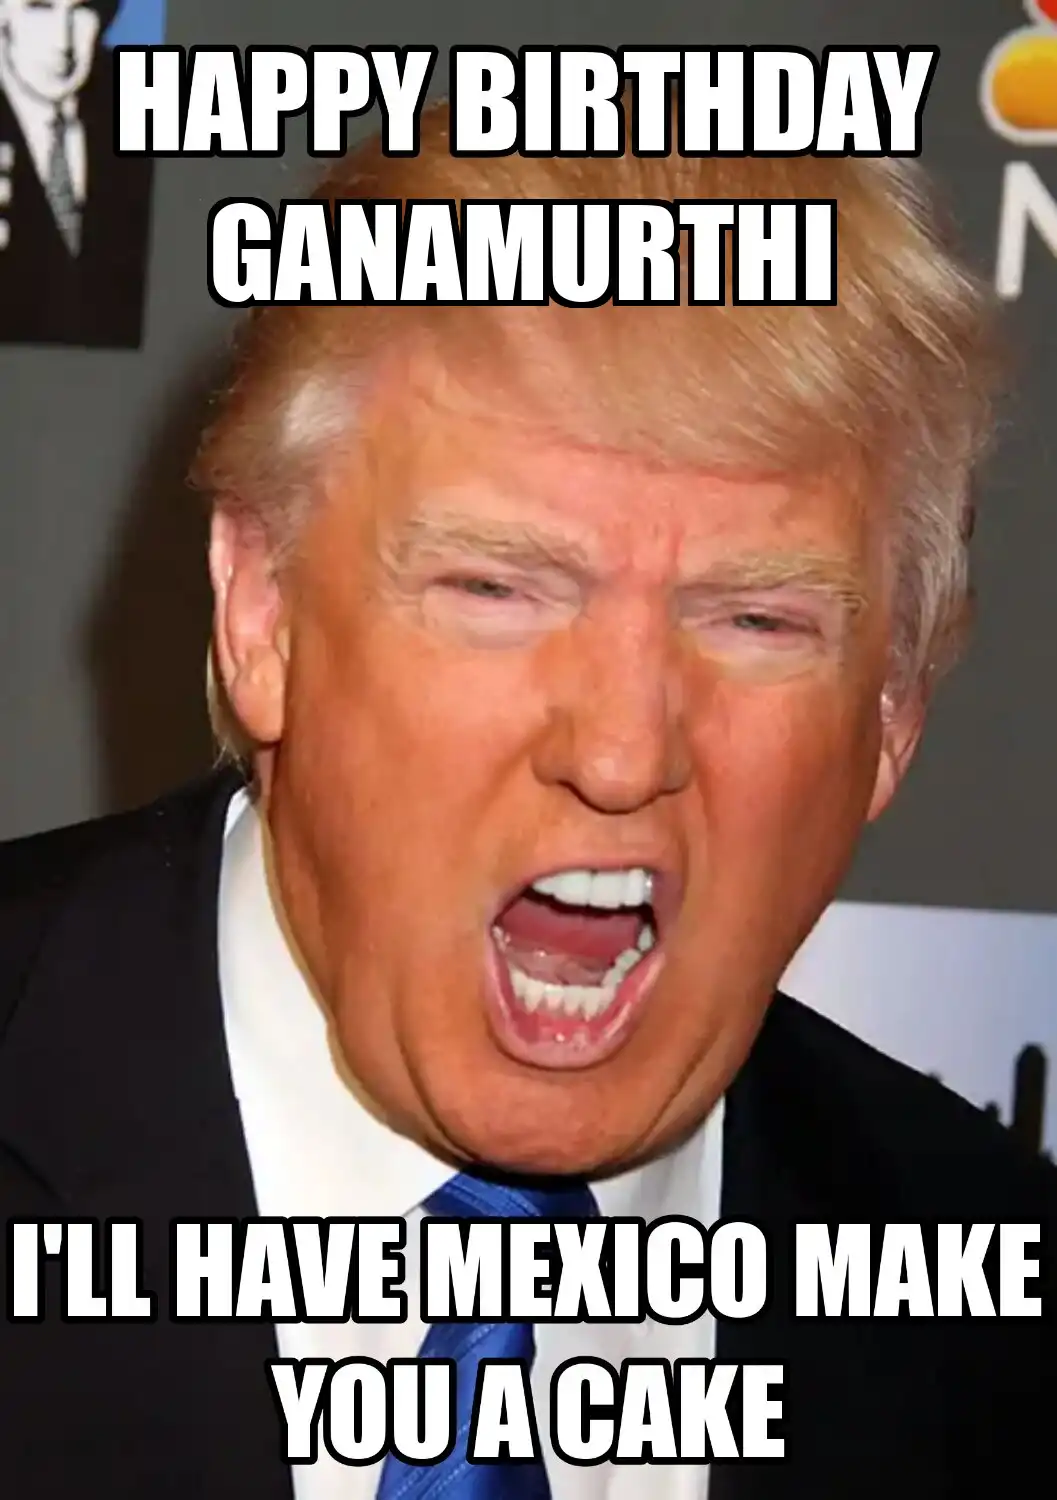 Happy Birthday Ganamurthi Mexico Make You A Cake Meme